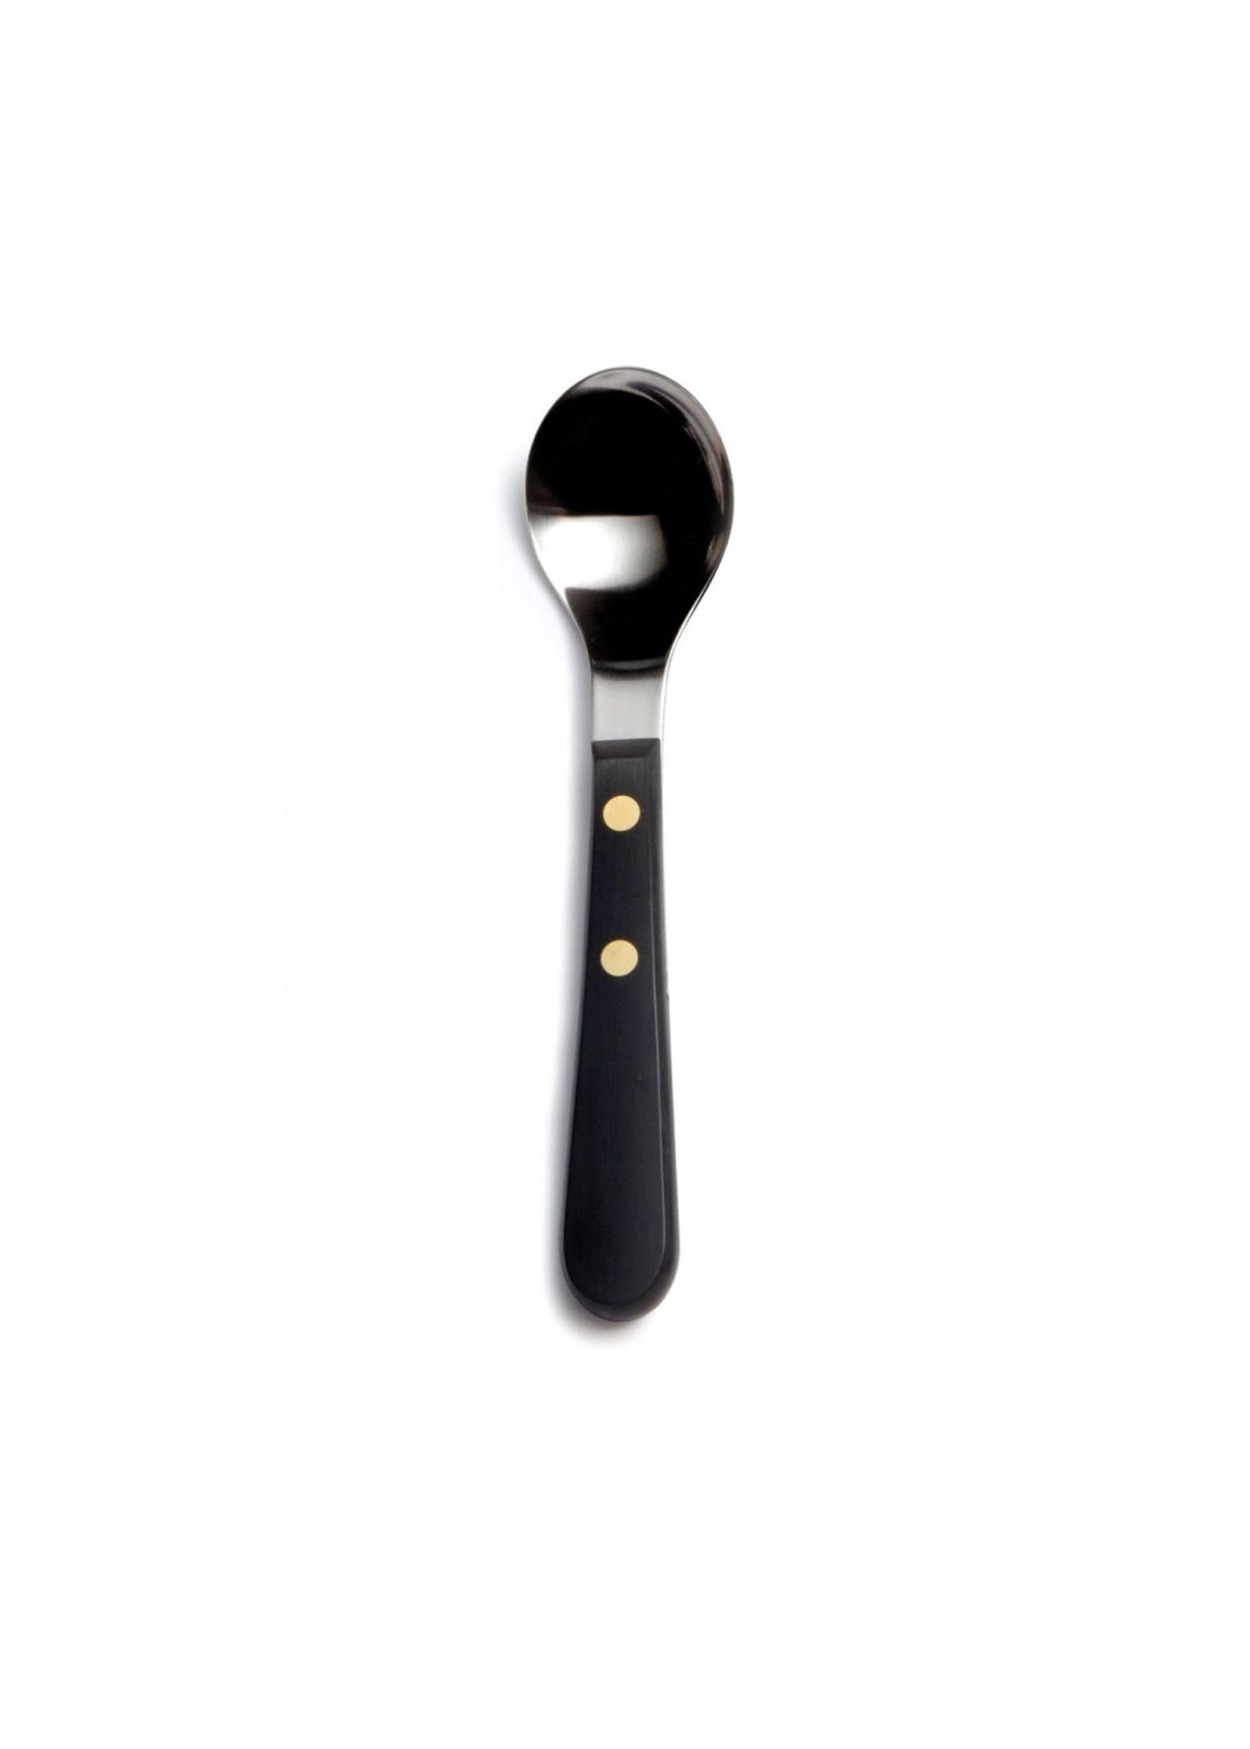 Provencal black fruit spoon